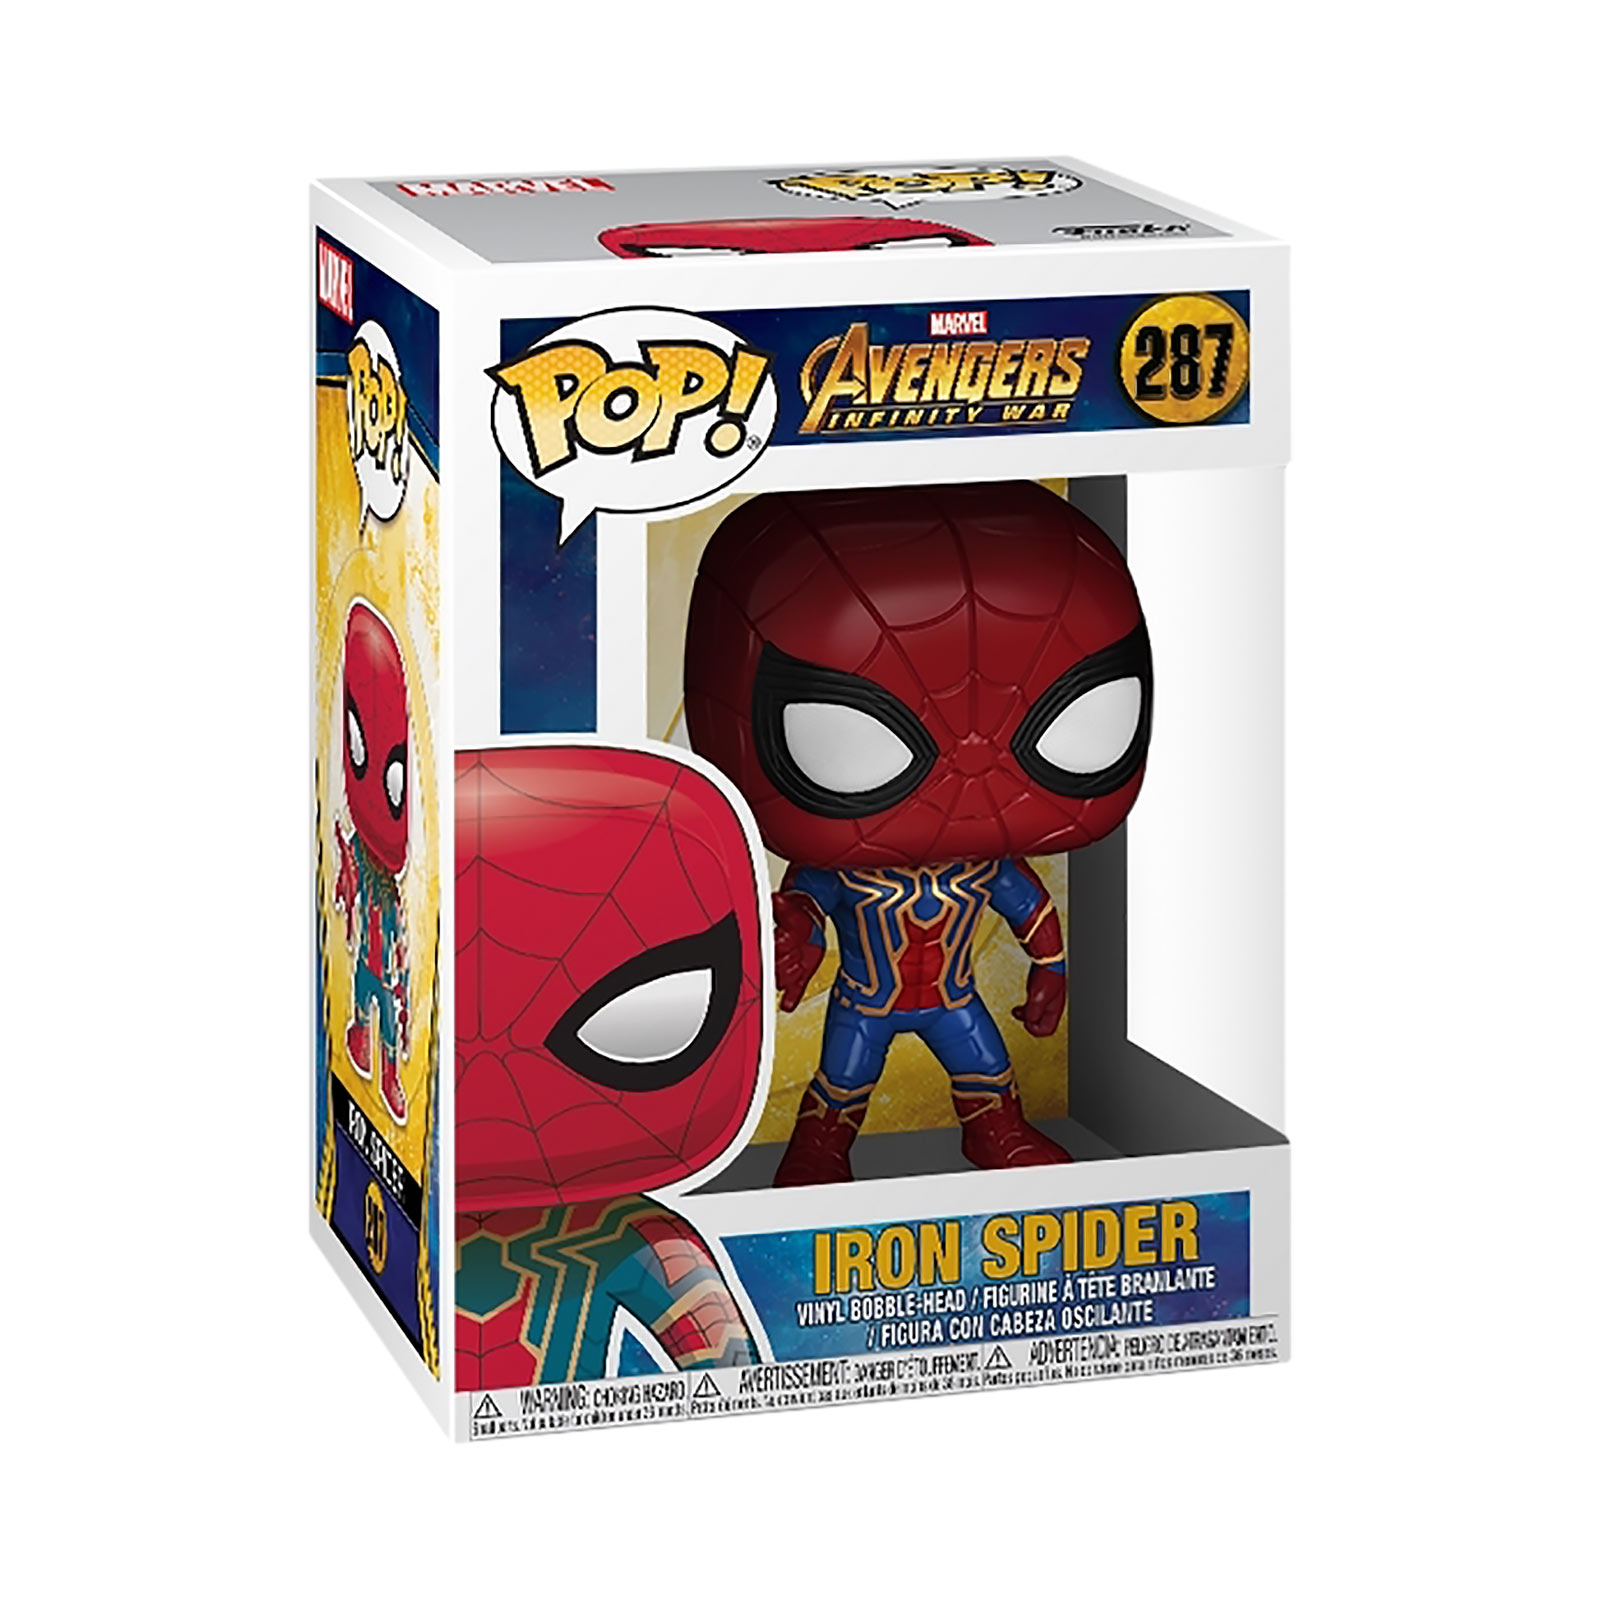 Avengers - Iron Spider Infinity War Funko Pop Bobblehead Figure